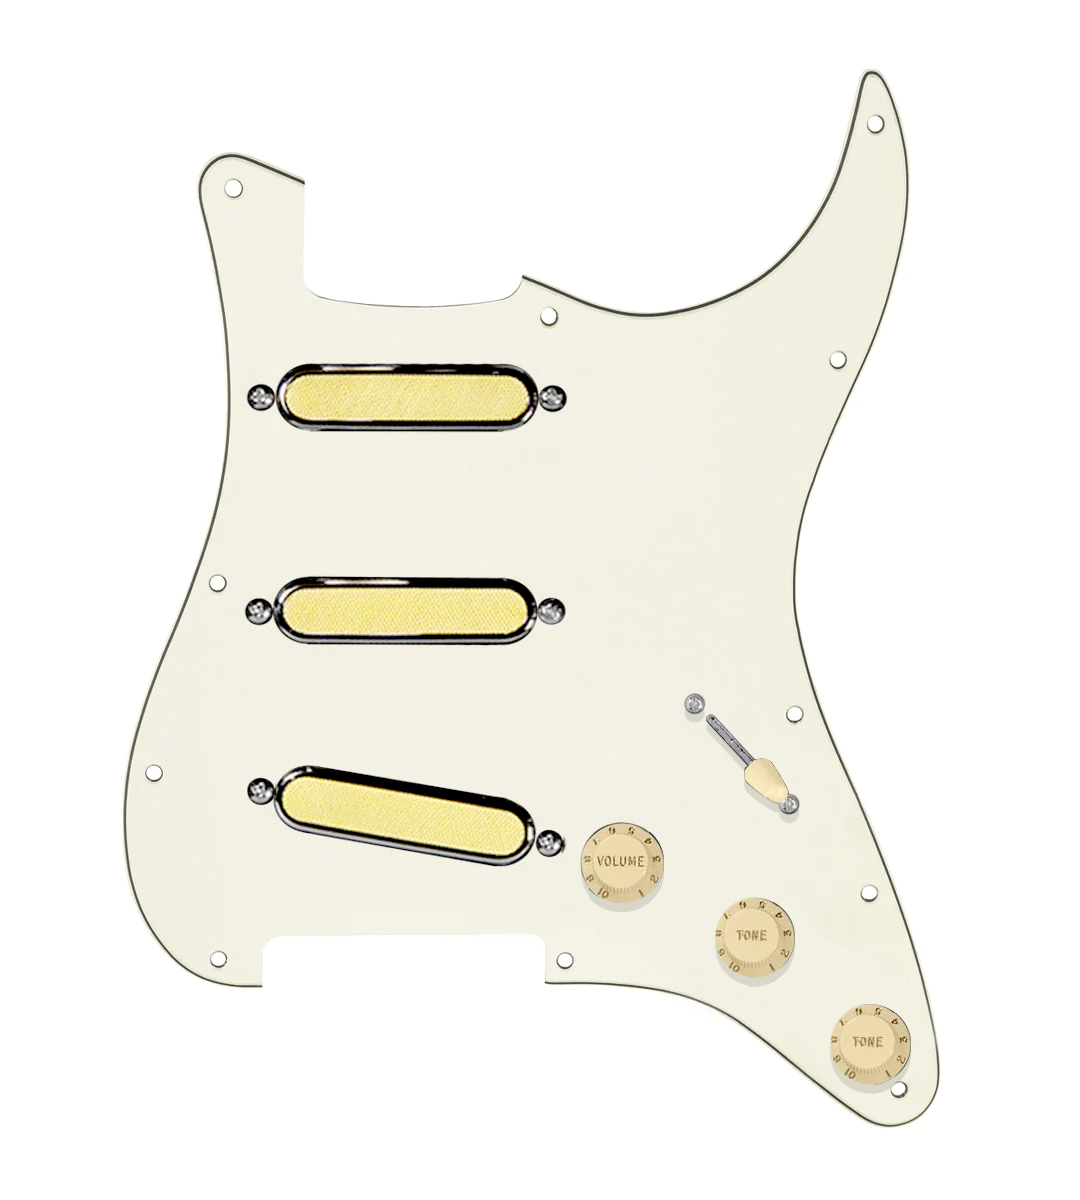 Gold Foil Loaded Pickguard for Stratocasters® - SLPG-GLDFL-AW-PPG-S5W